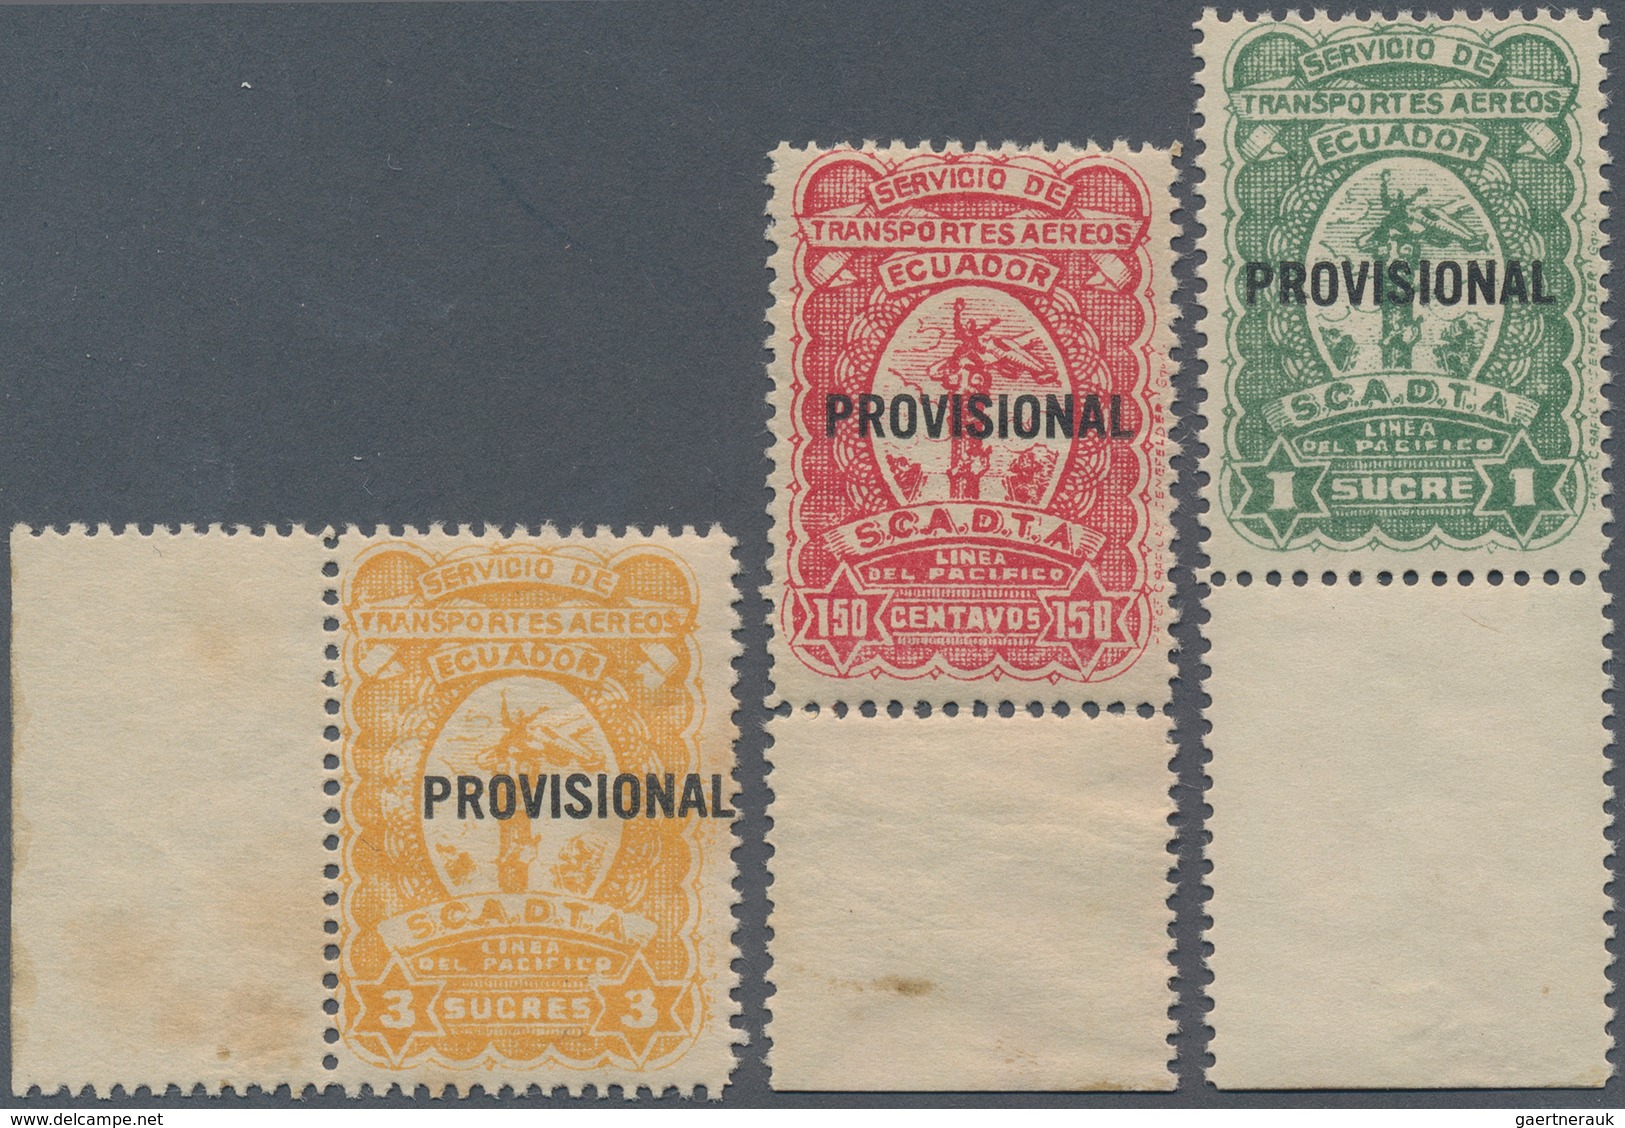 SCADTA - Ausgaben Für Ecuador: 1928, Three Official SCADTA Seals Mnh For Ecuador With Horizontal "PR - Ecuador